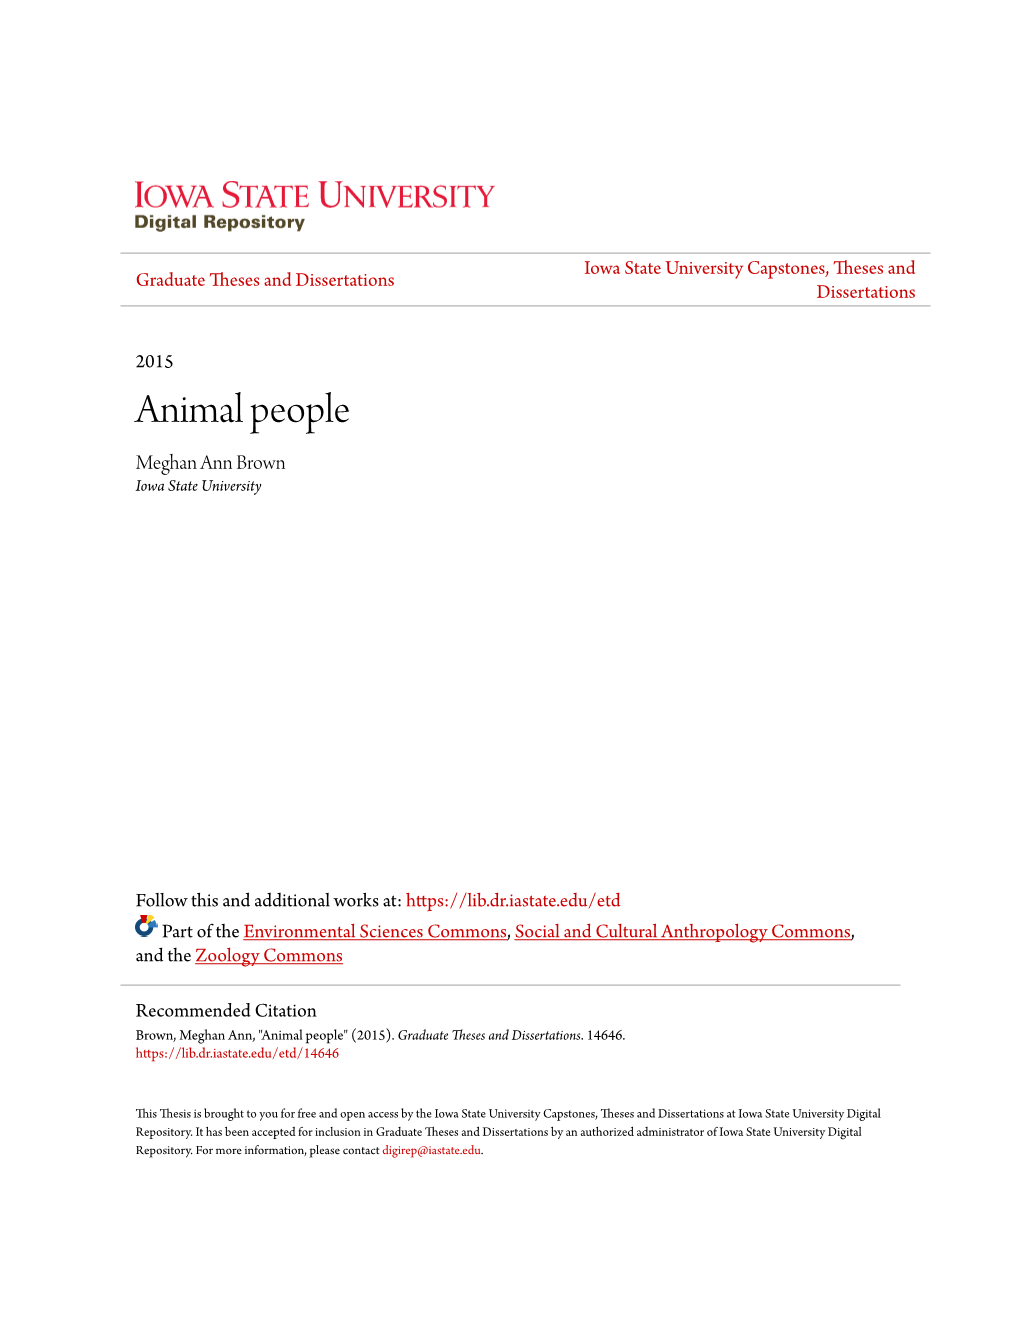 Animal People Meghan Ann Brown Iowa State University